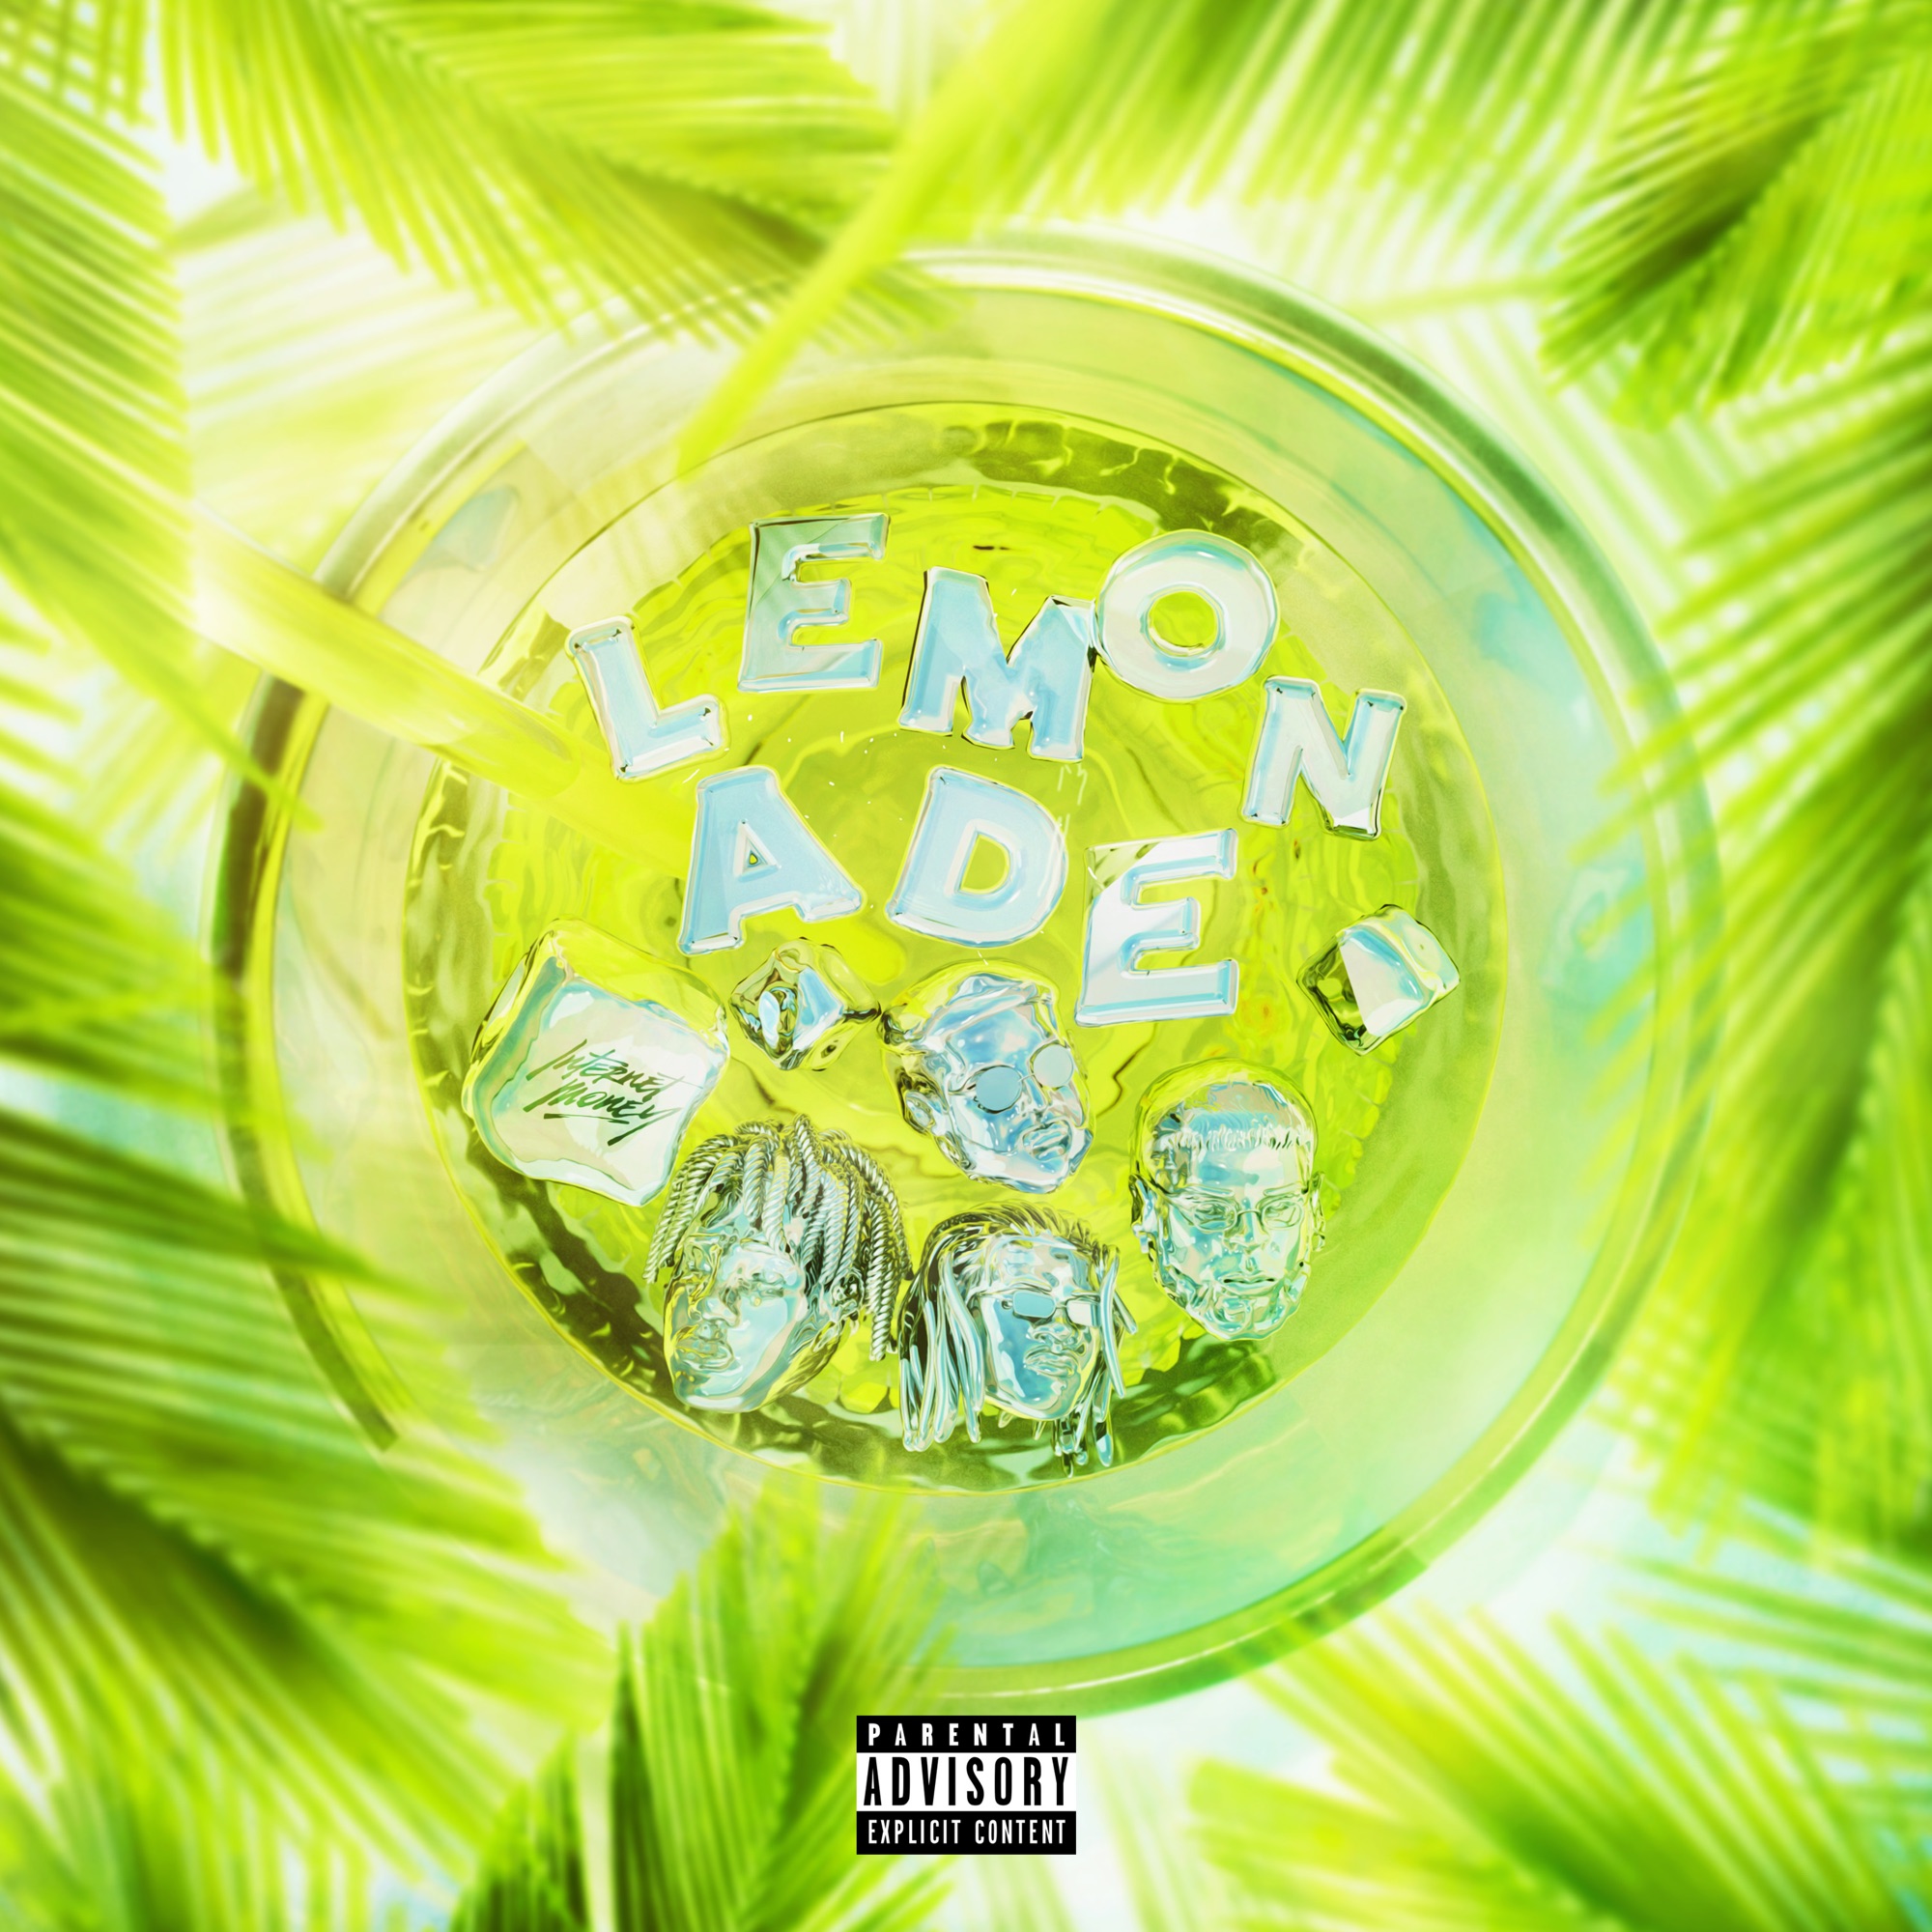 Internet Money, Anuel AA & Gunna - Lemonade (feat. Don Toliver & NAV) [Latin Remix] - Single